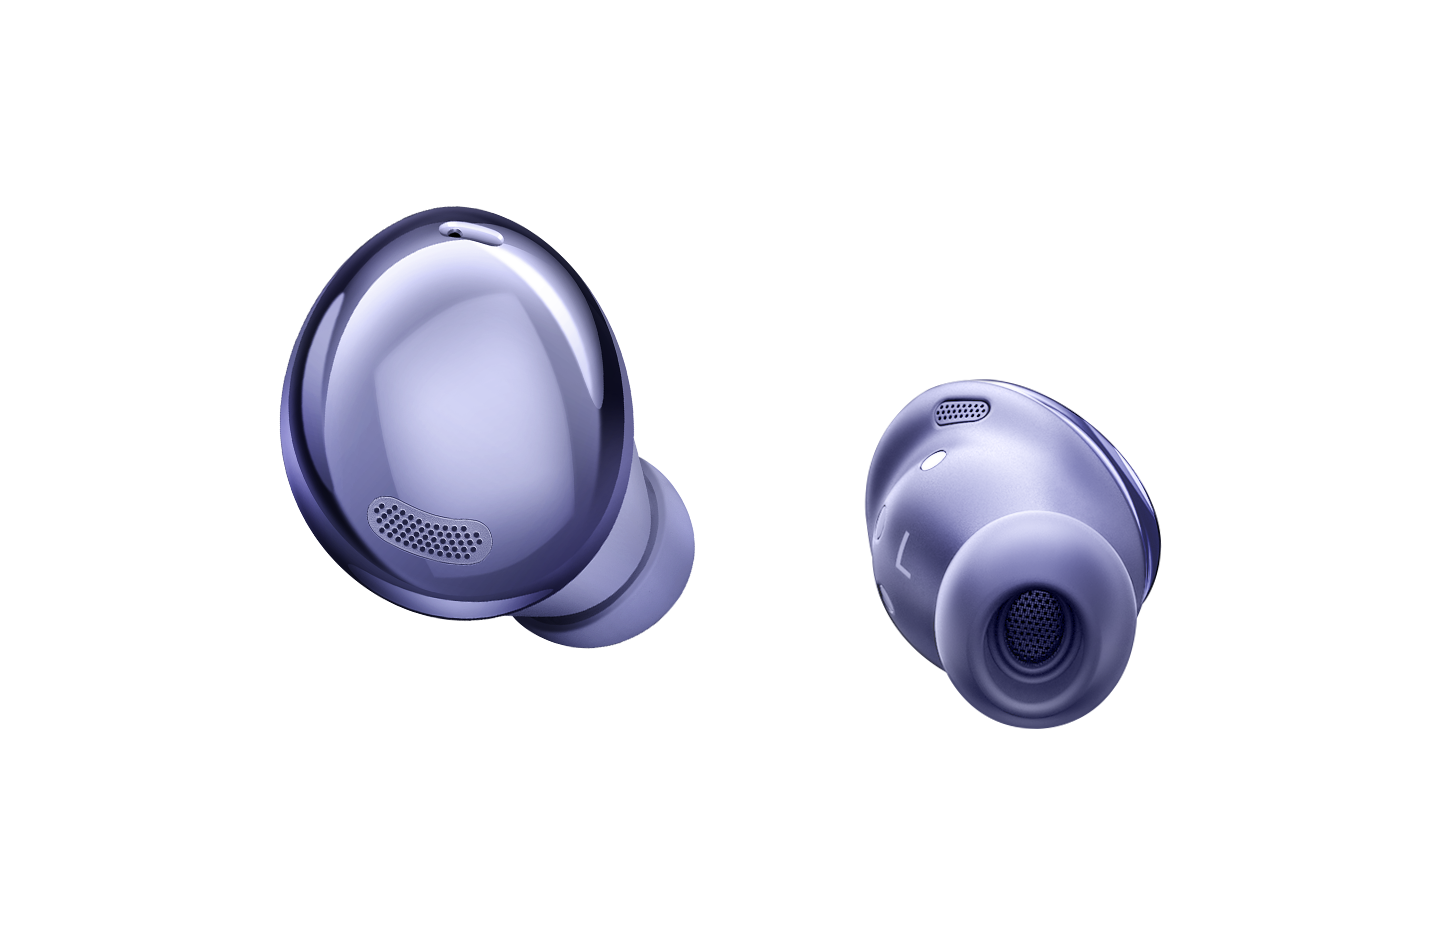 Galaxy Buds Pro earbuds in Phantom Violet